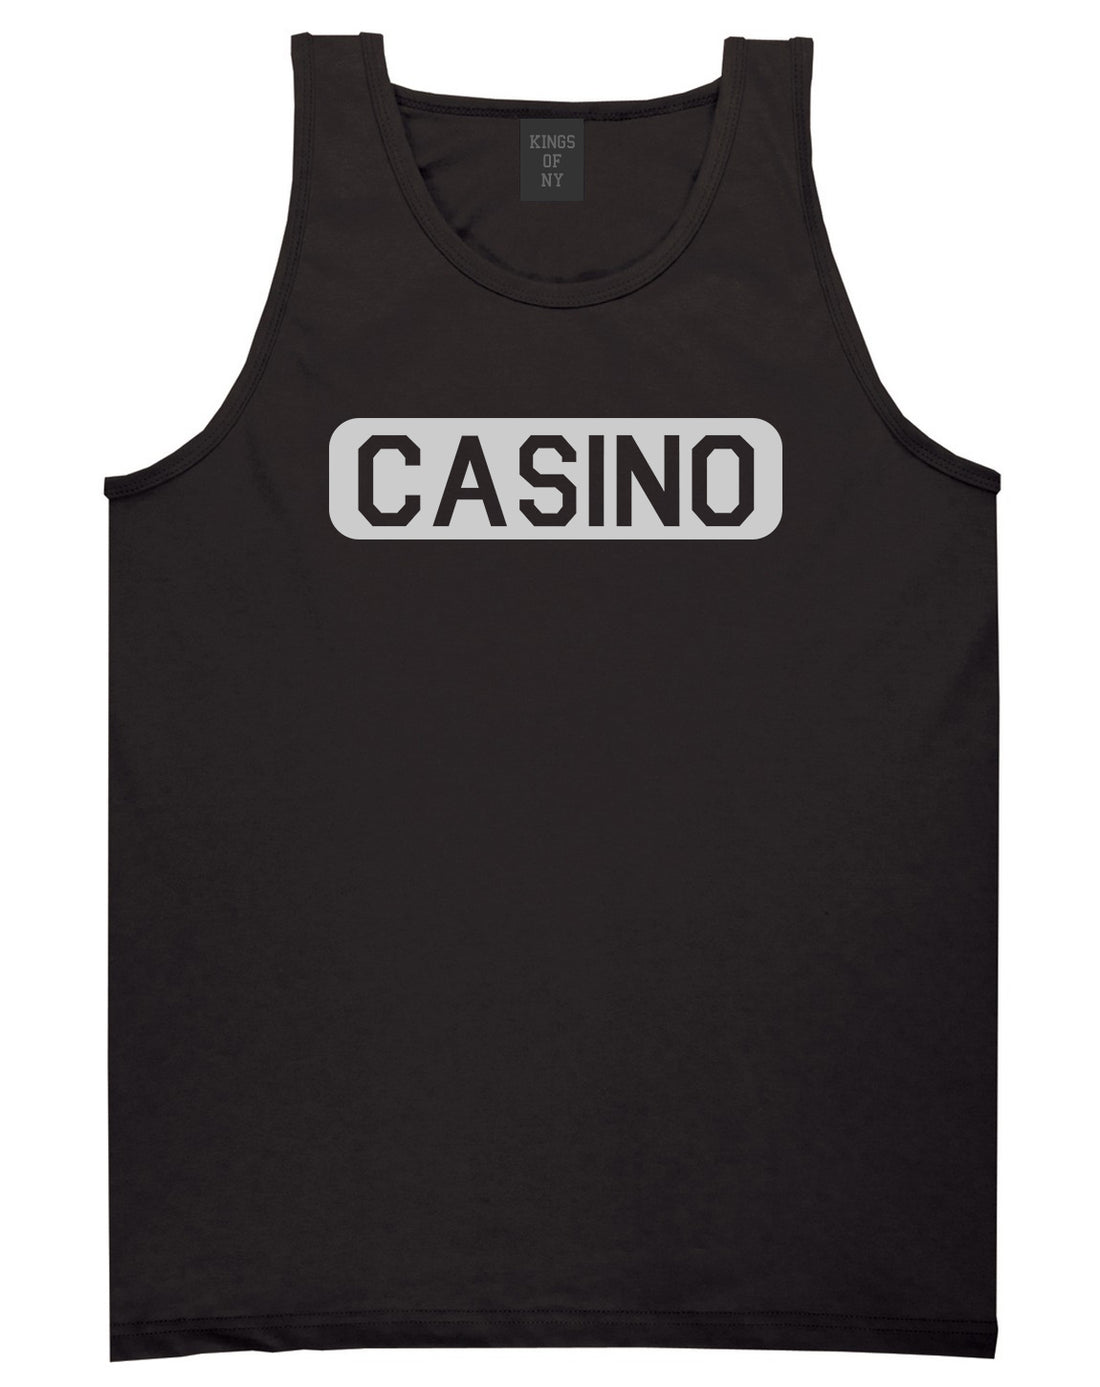 Casino Black Tank Top Shirt by Kings Of NY